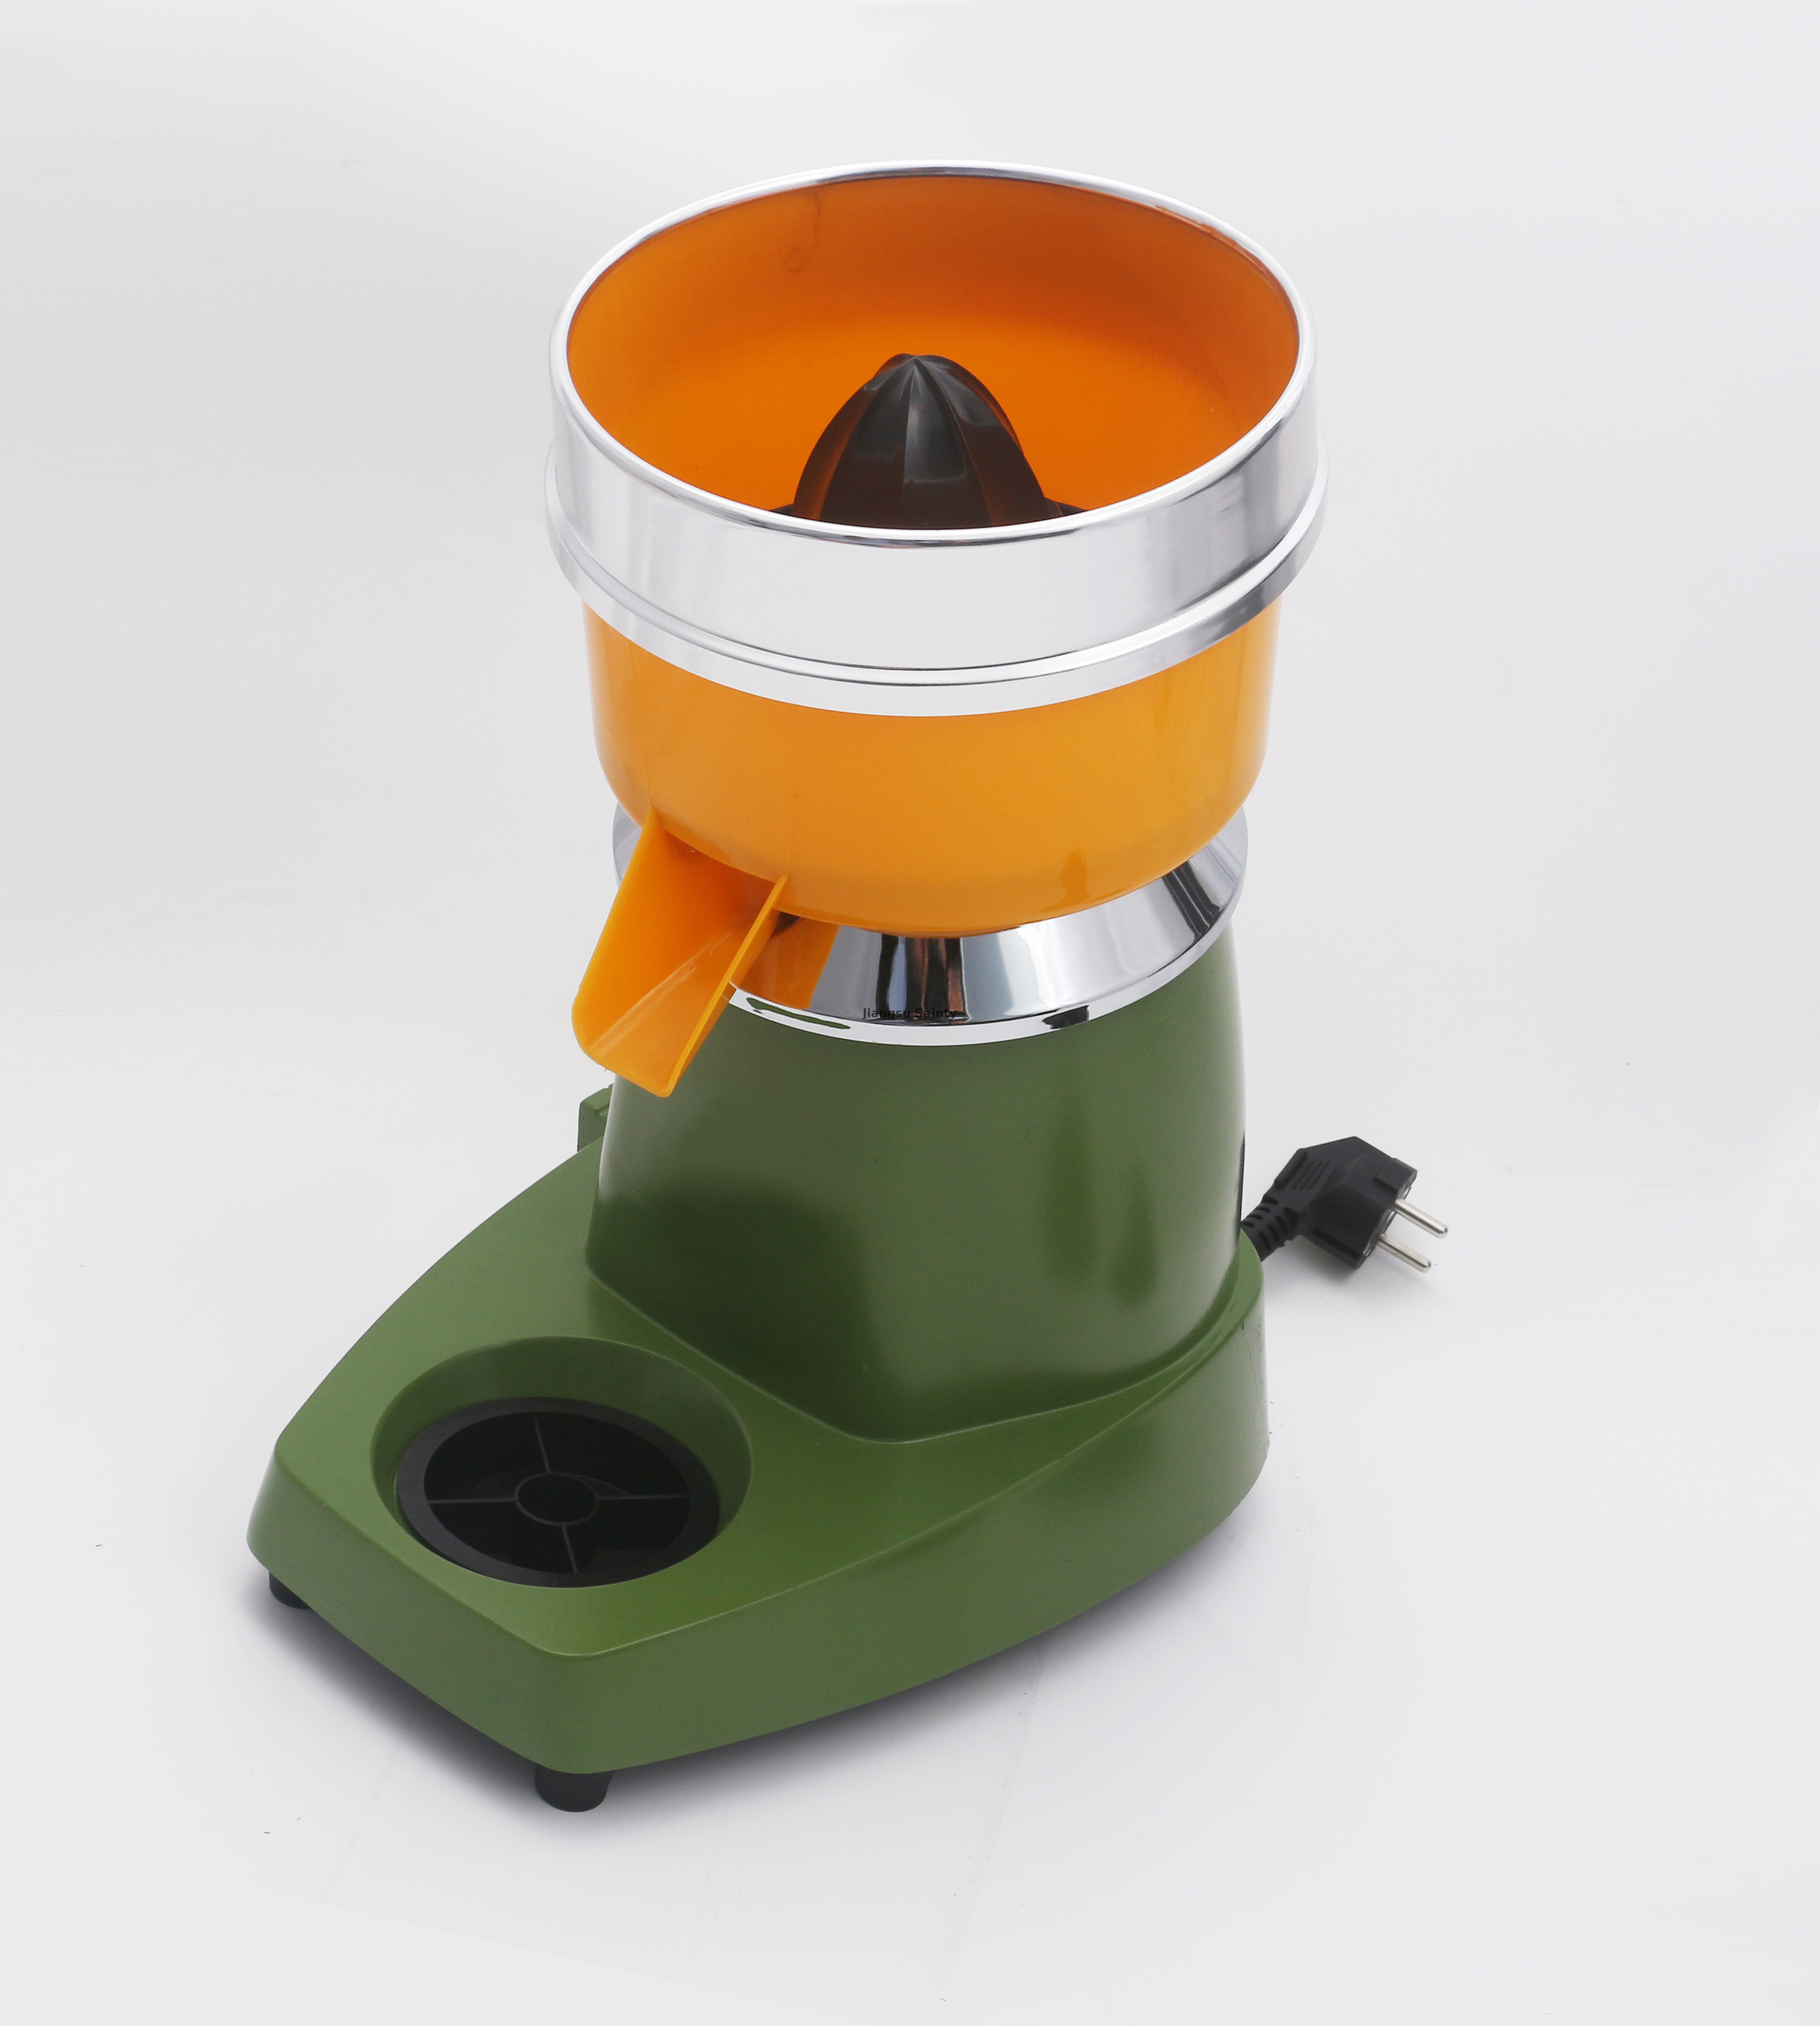 Home Mini Plastic Orange Juicer